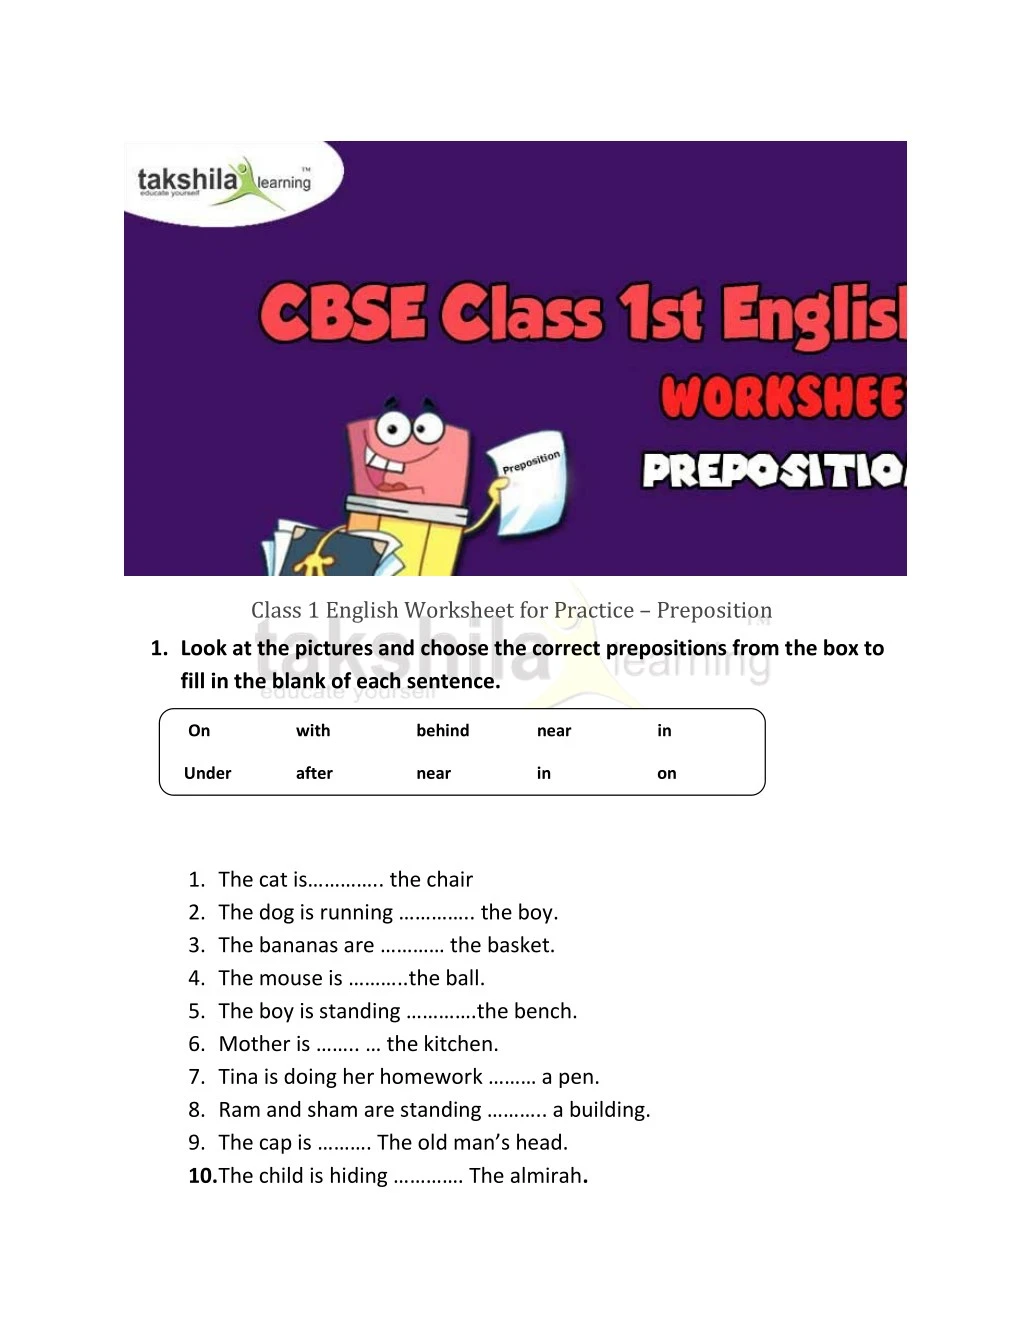 PPT Class 1 English Worksheet For Practice Preposition Takshilalearning PowerPoint